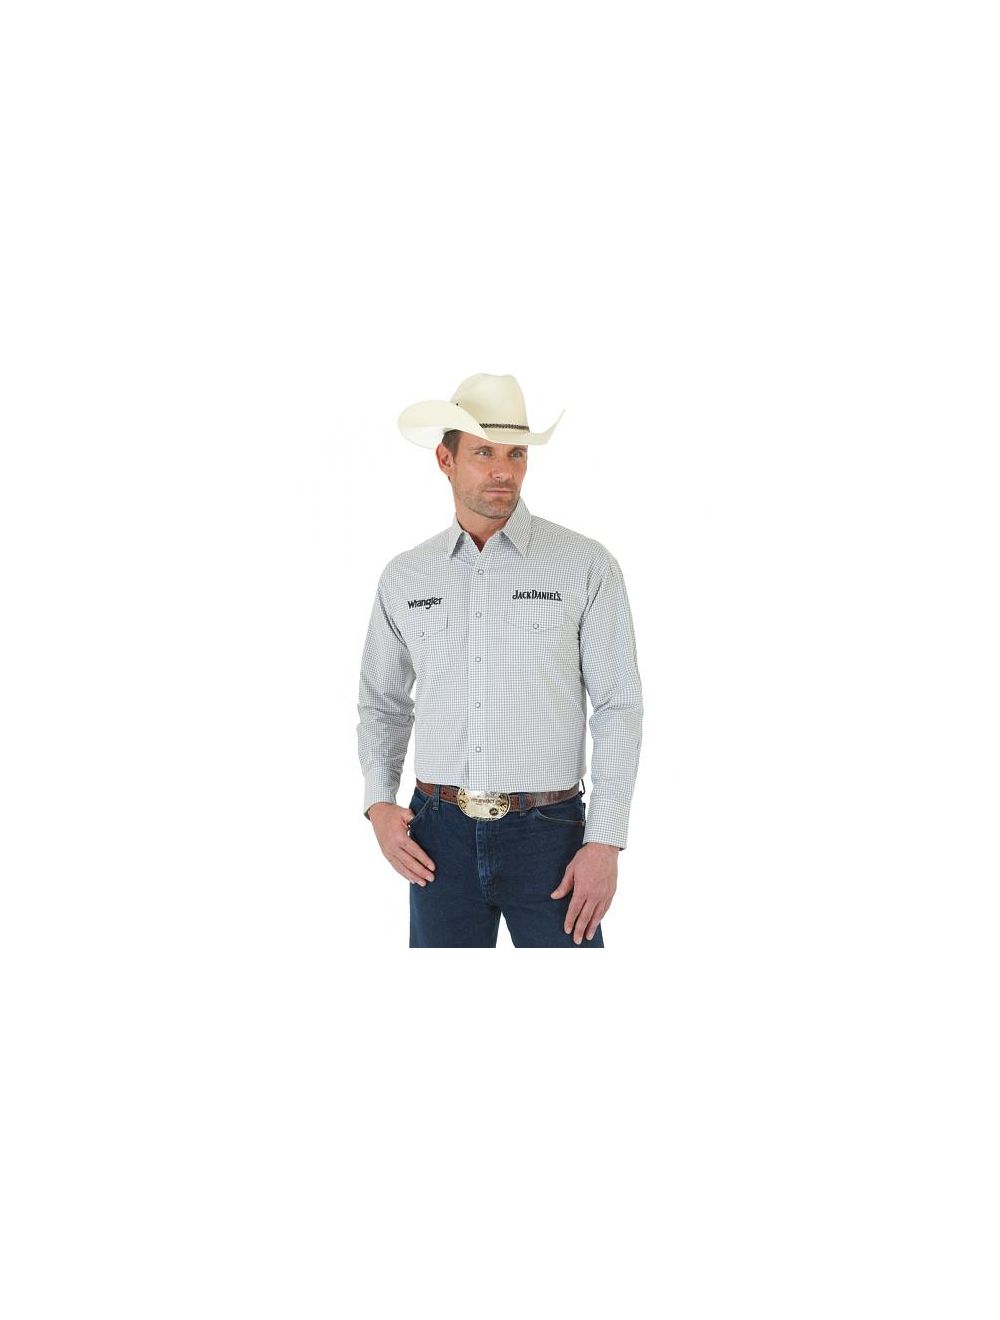 Men's Wrangler Jack Daniel's Logo Grey & White Plaid Snap Shirt